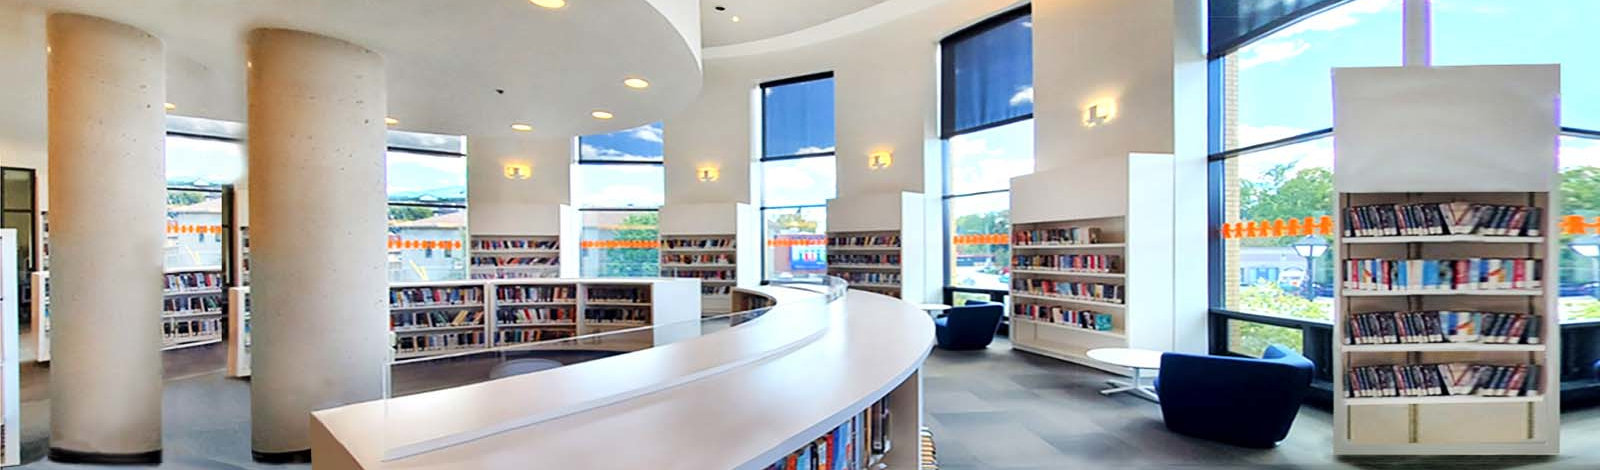 Aurora Public Library interior image view